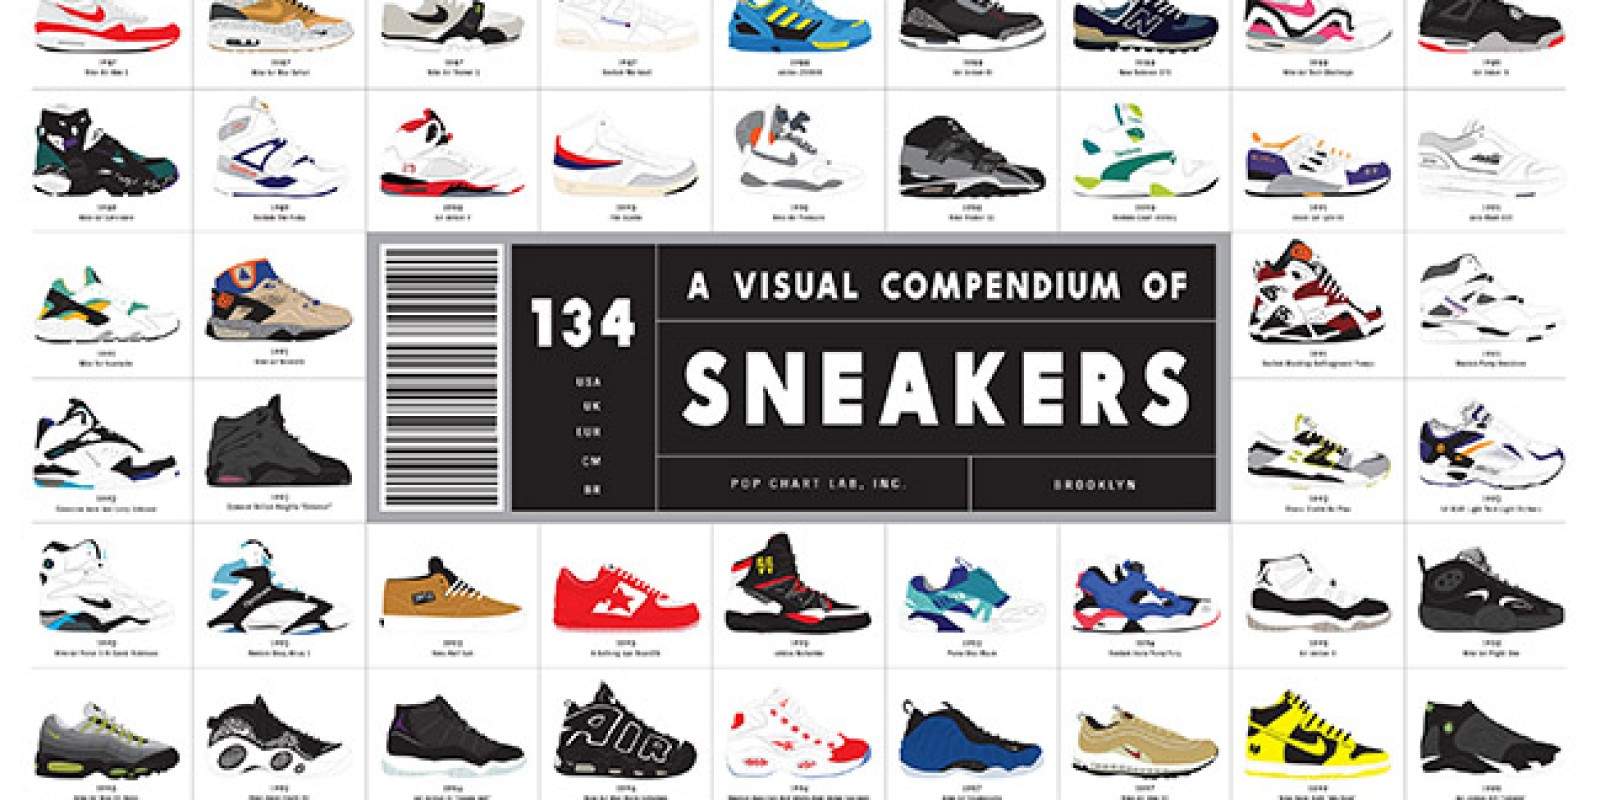 A Visual Compendium Of Sneakers Von Pop Chart Lab Con - vrogue.co